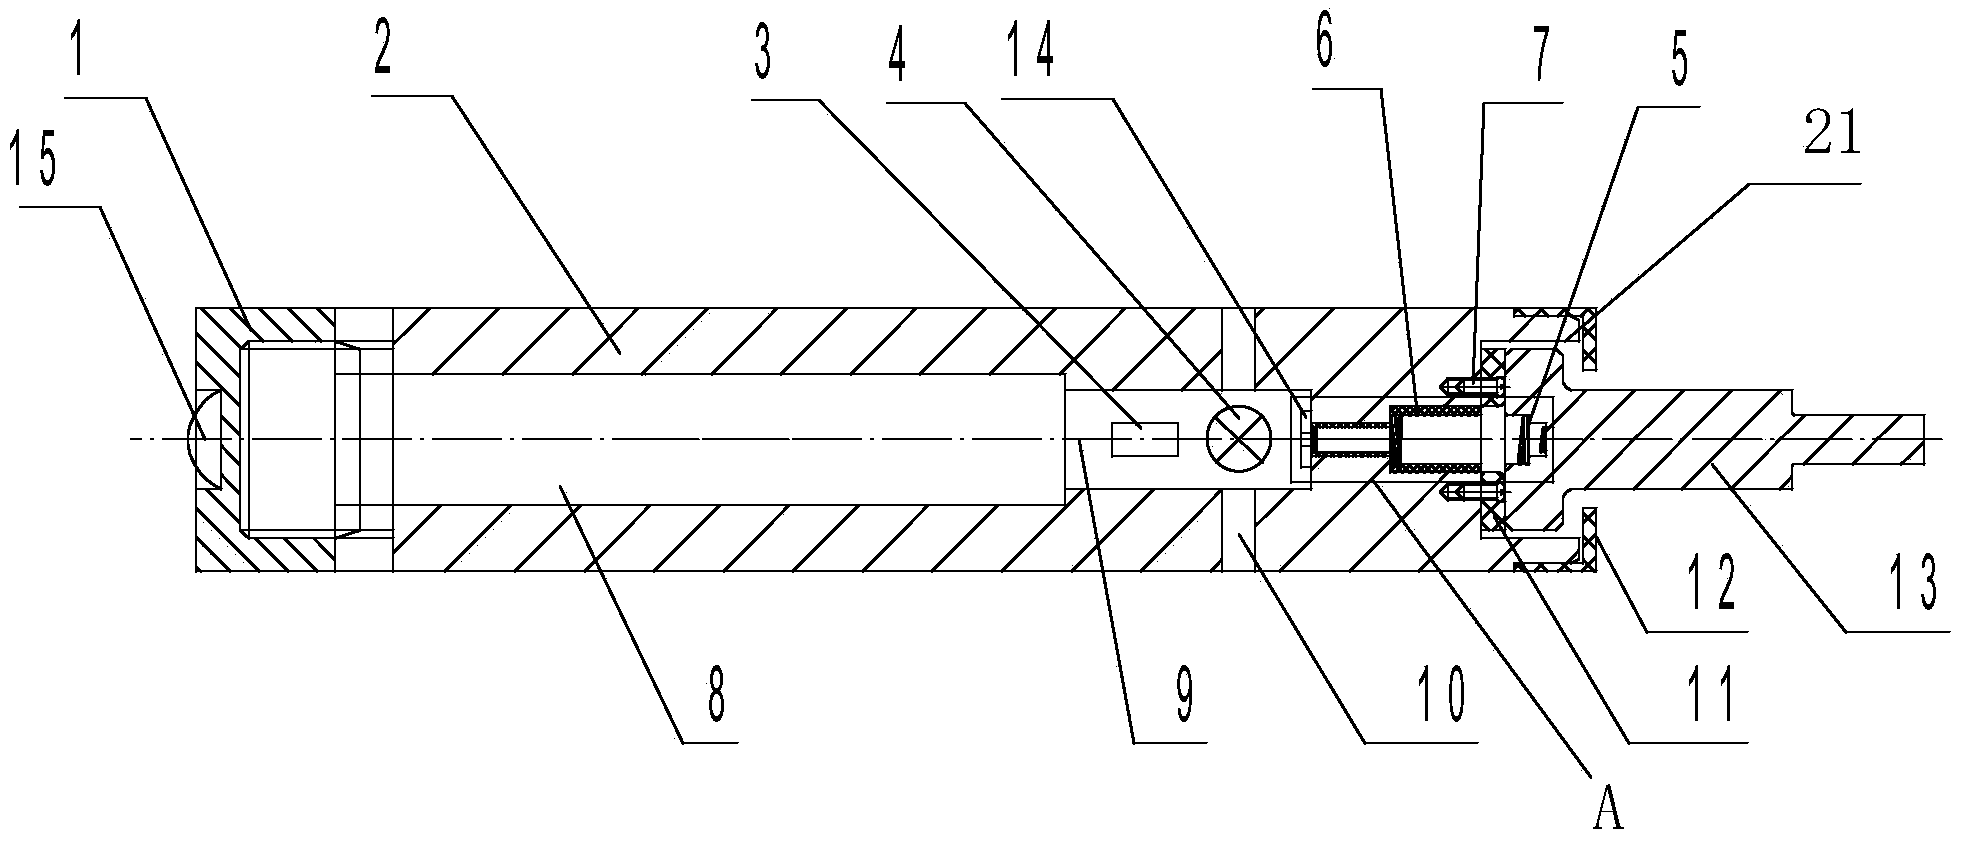 Internal circulation photoelectric type edge finder